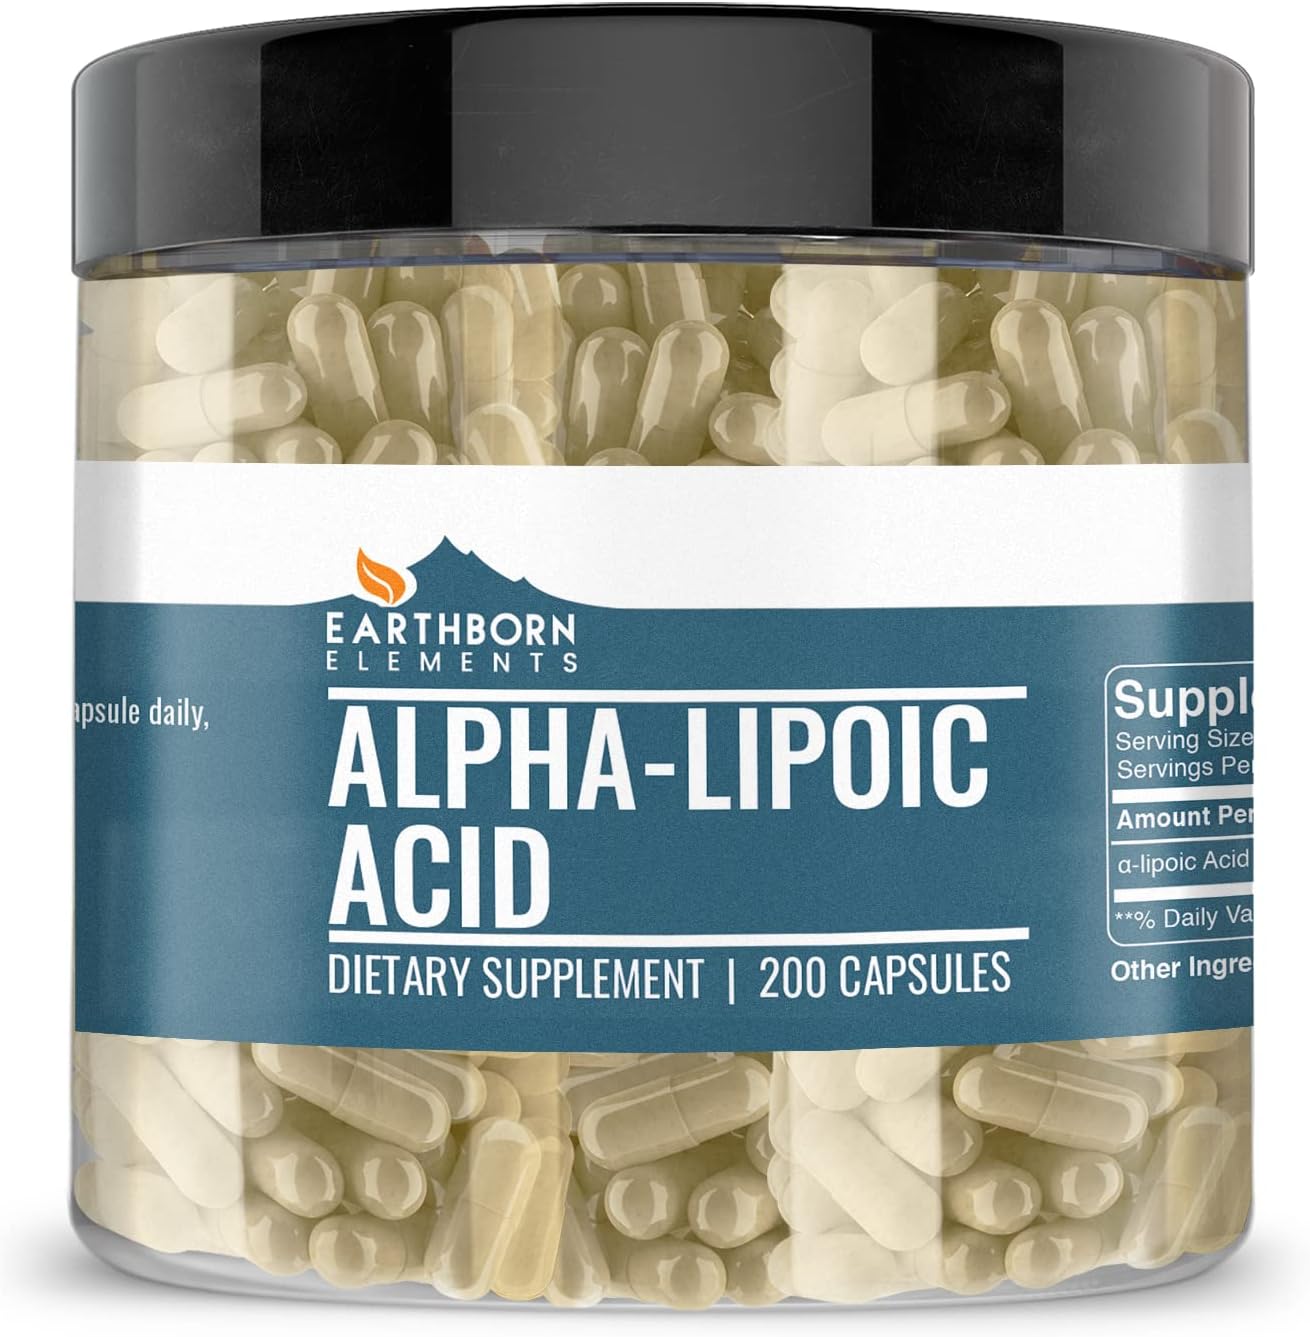 Earthborn Elements Alpha-Lipoic Acid 200 Capsules, Pure & Undiluted, No Additives